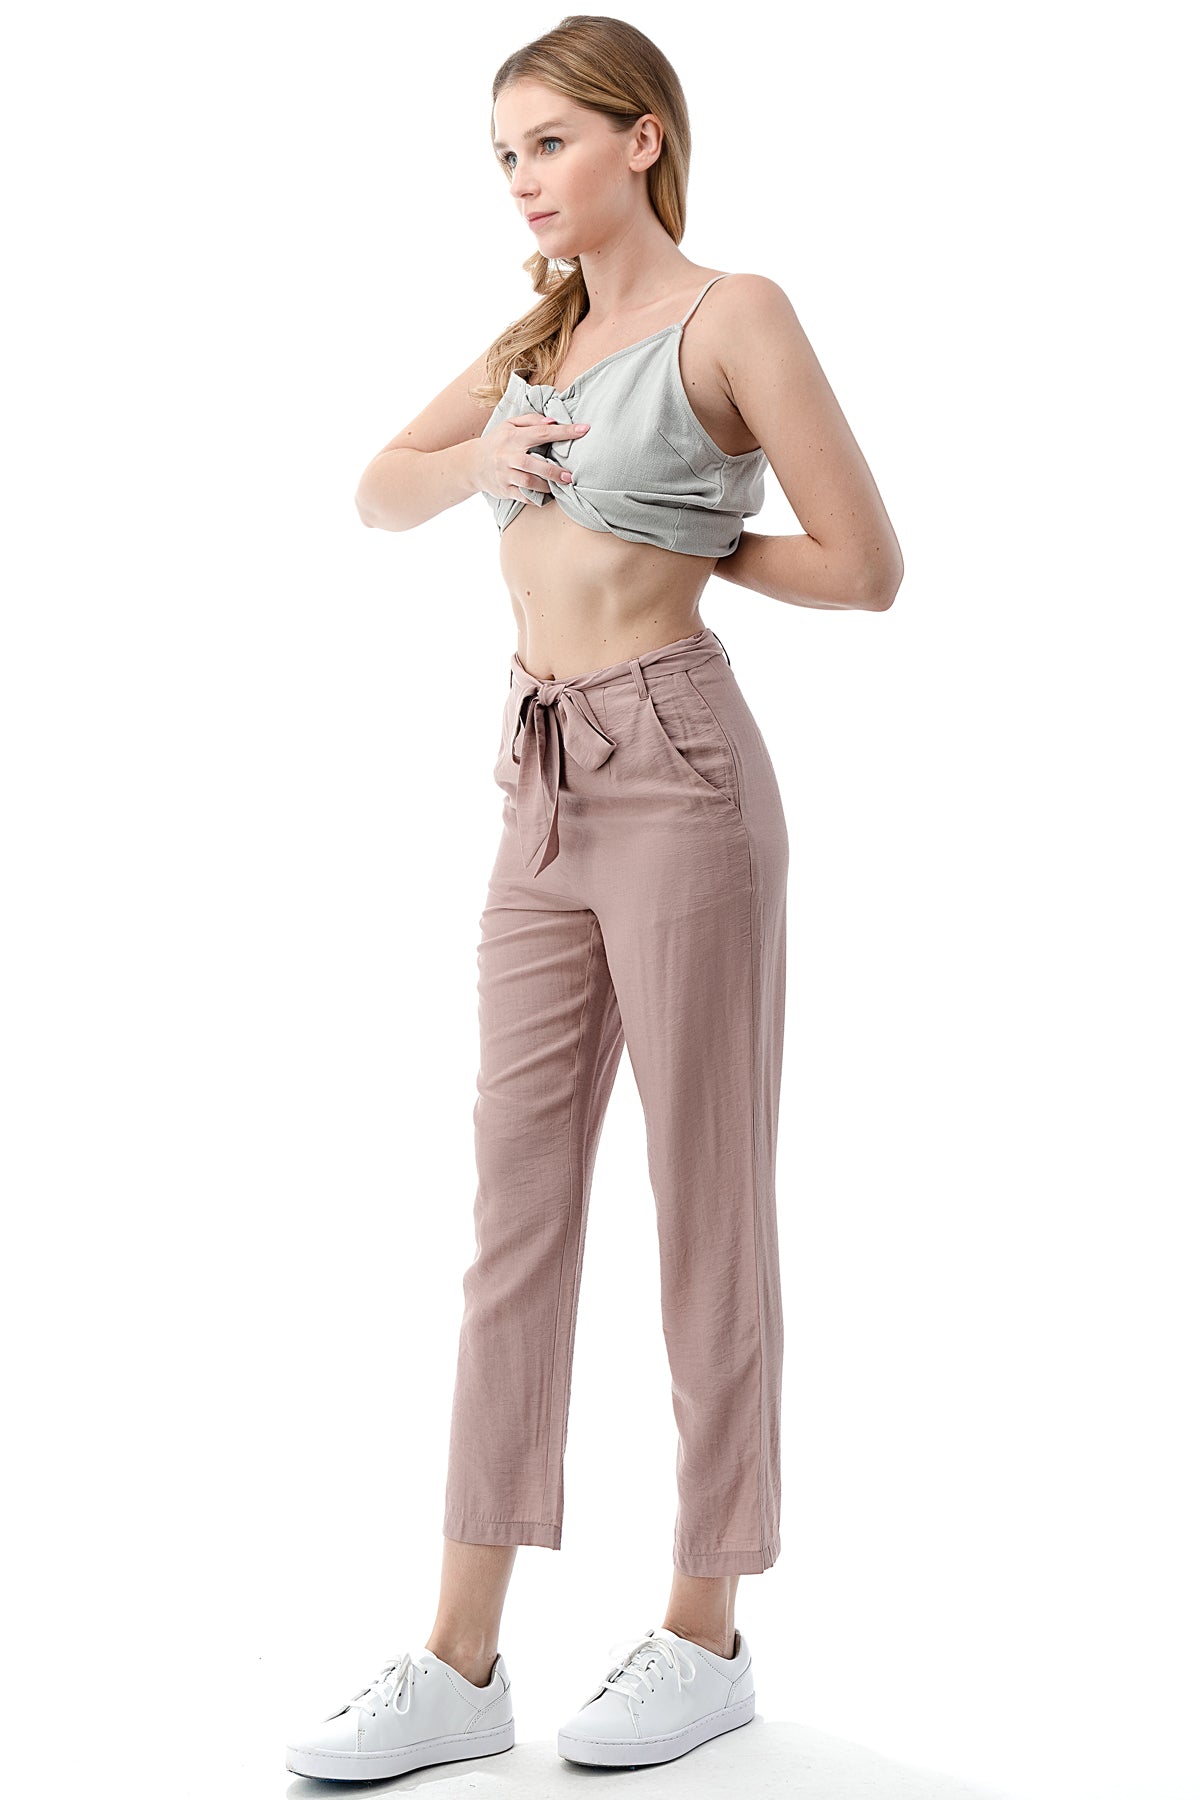 EDGY Land Girl's and Women's Self Tie Belt Slit Pocket Slim-Sation CroPPEd Pant